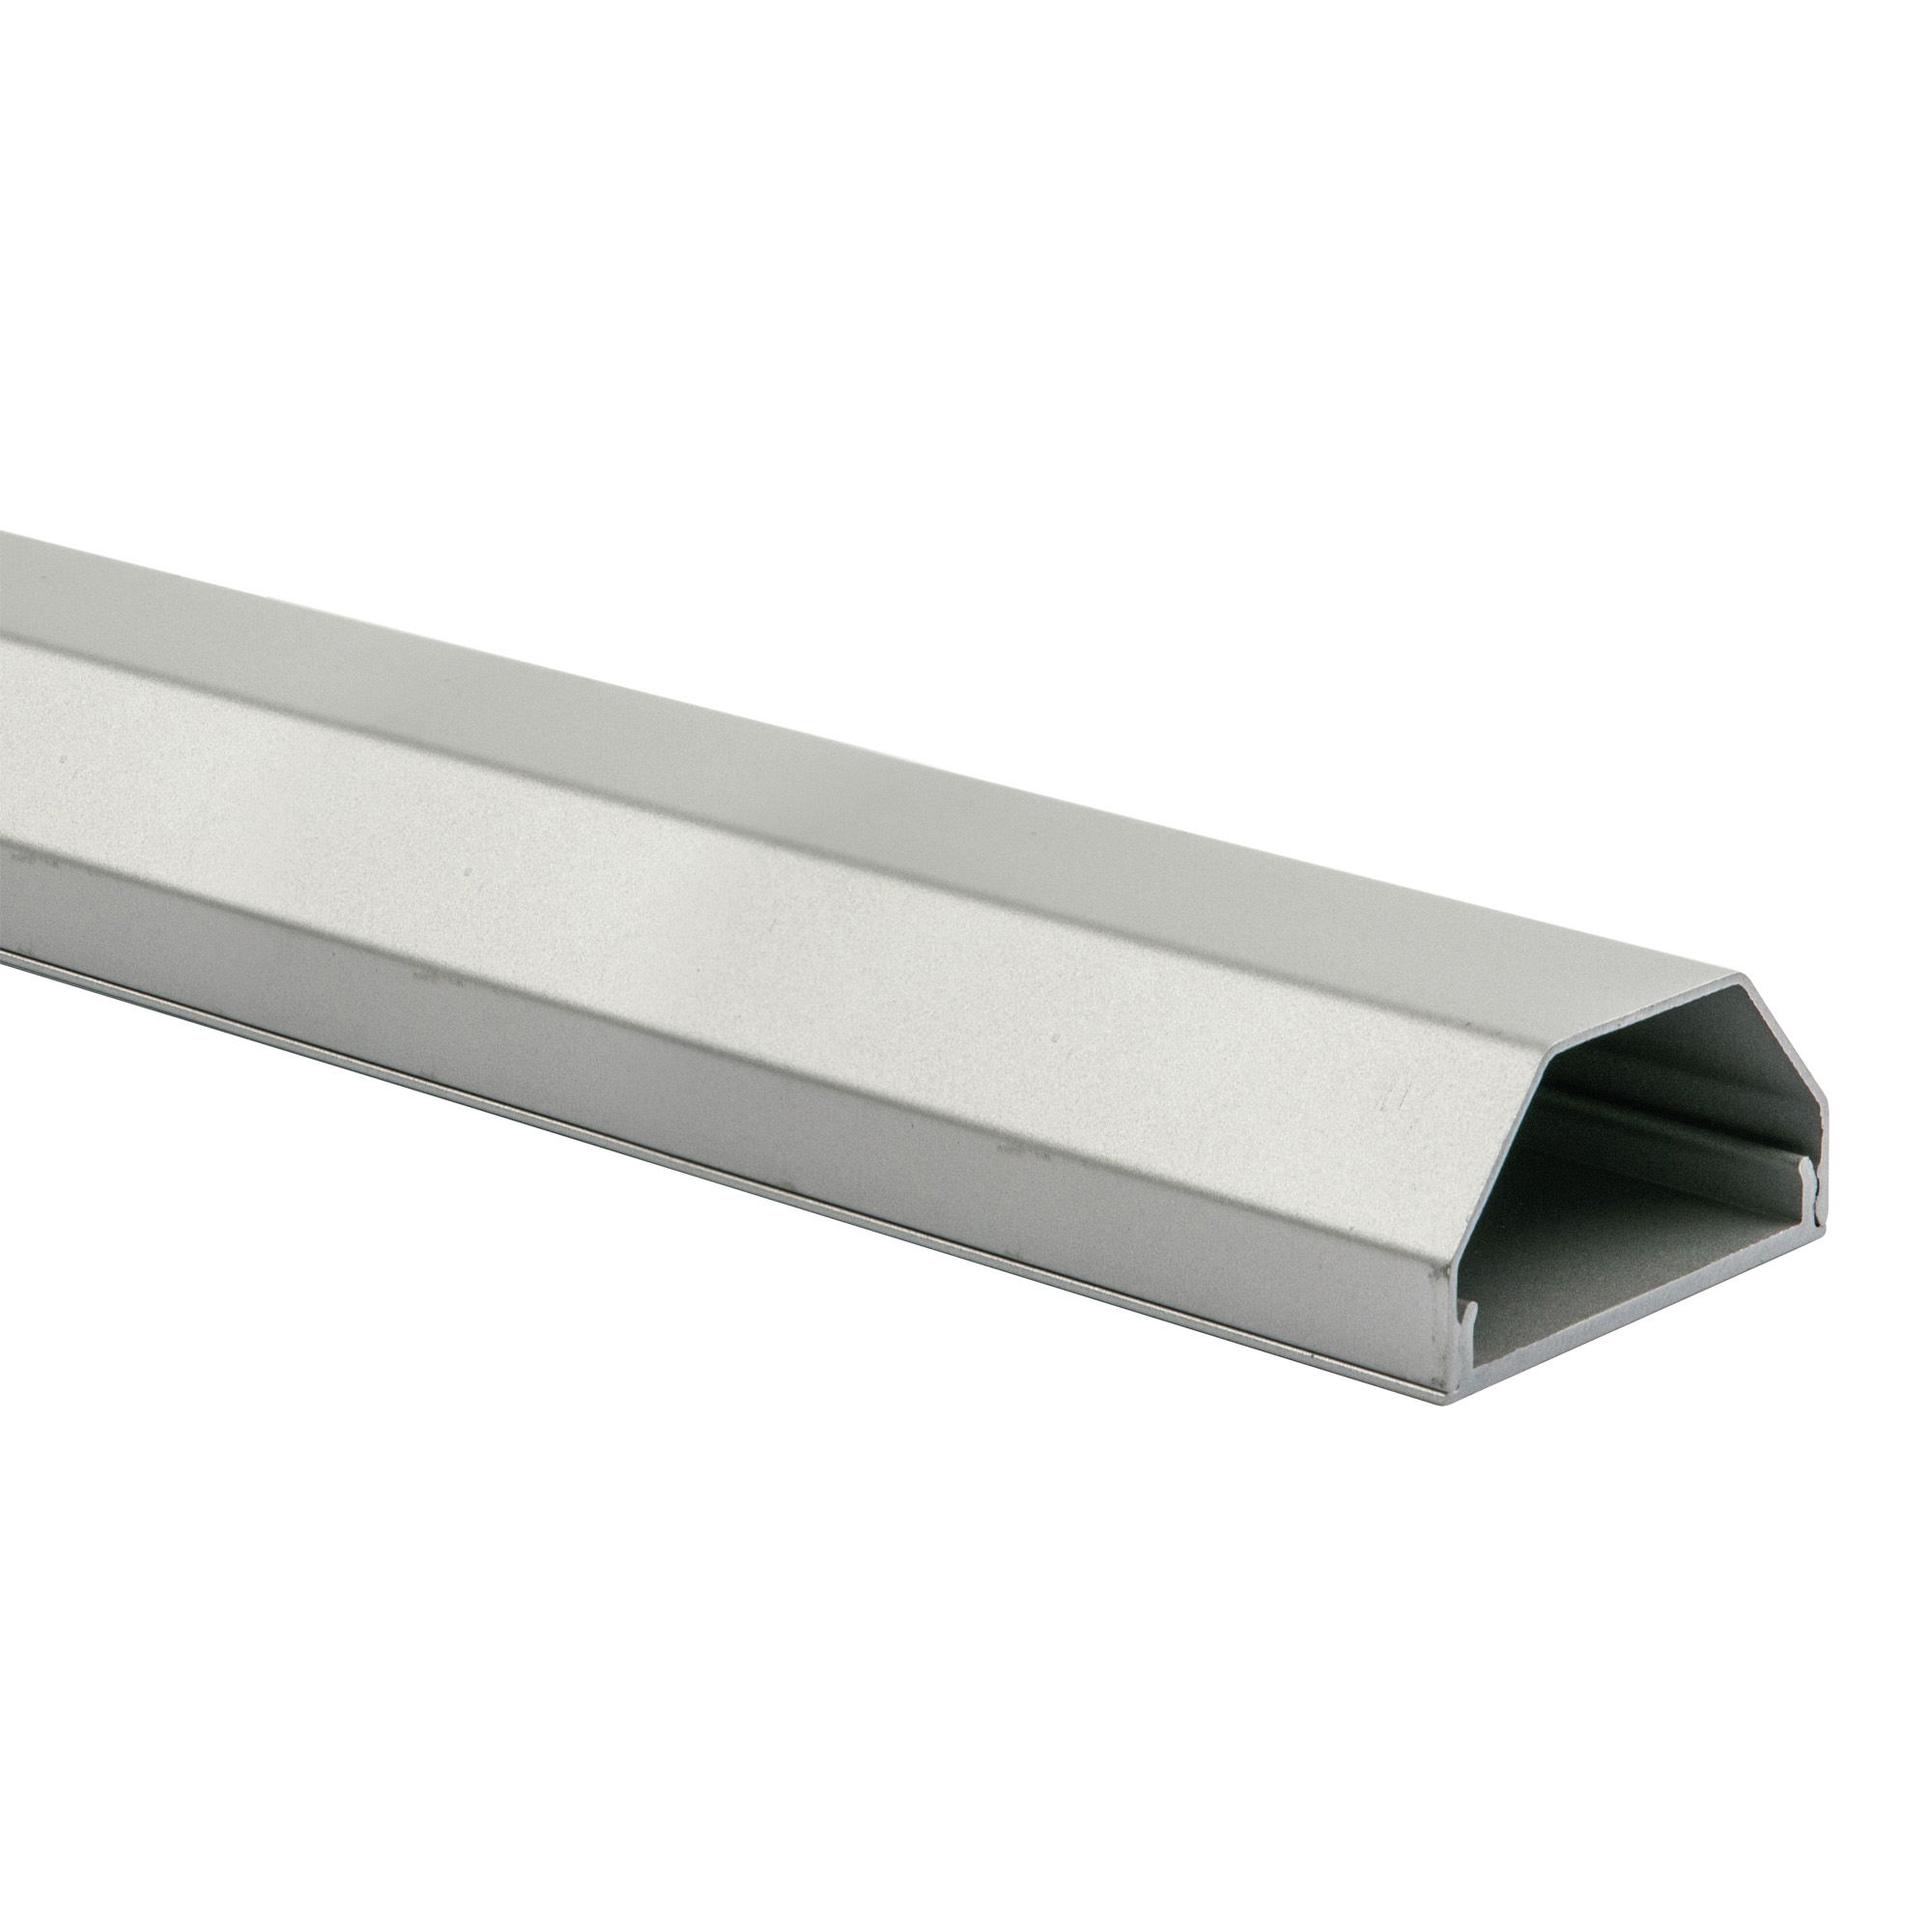 Kabelkanal Aluminium 1100 mm grau + product picture